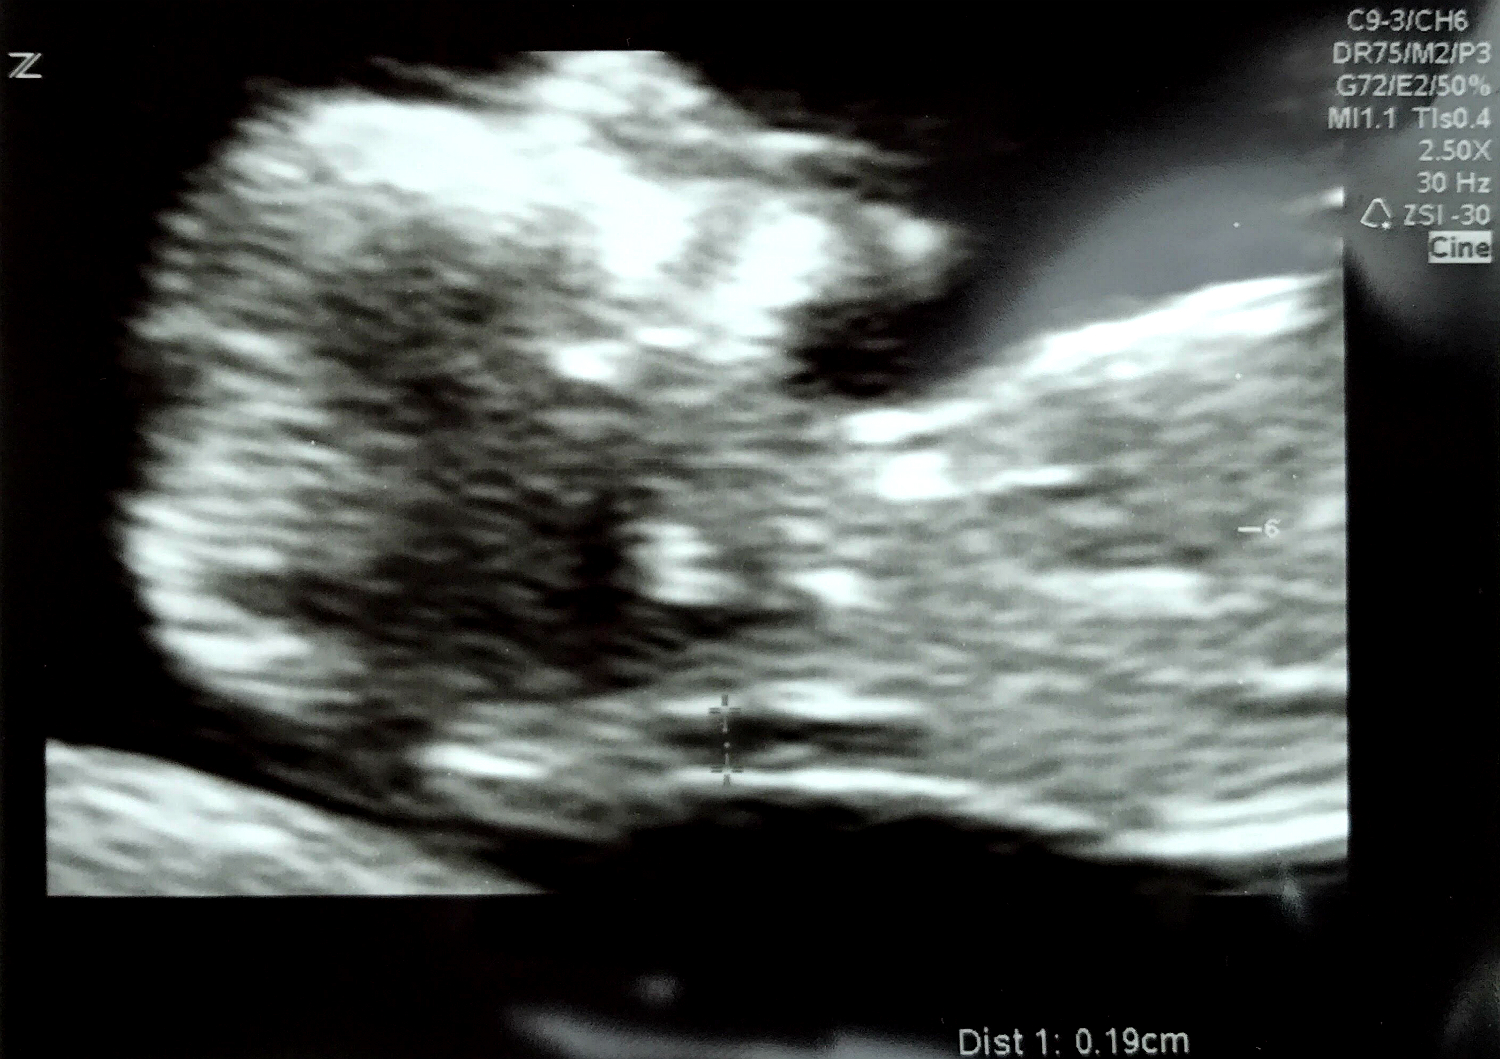 Ultrasound Image - Large.jpg